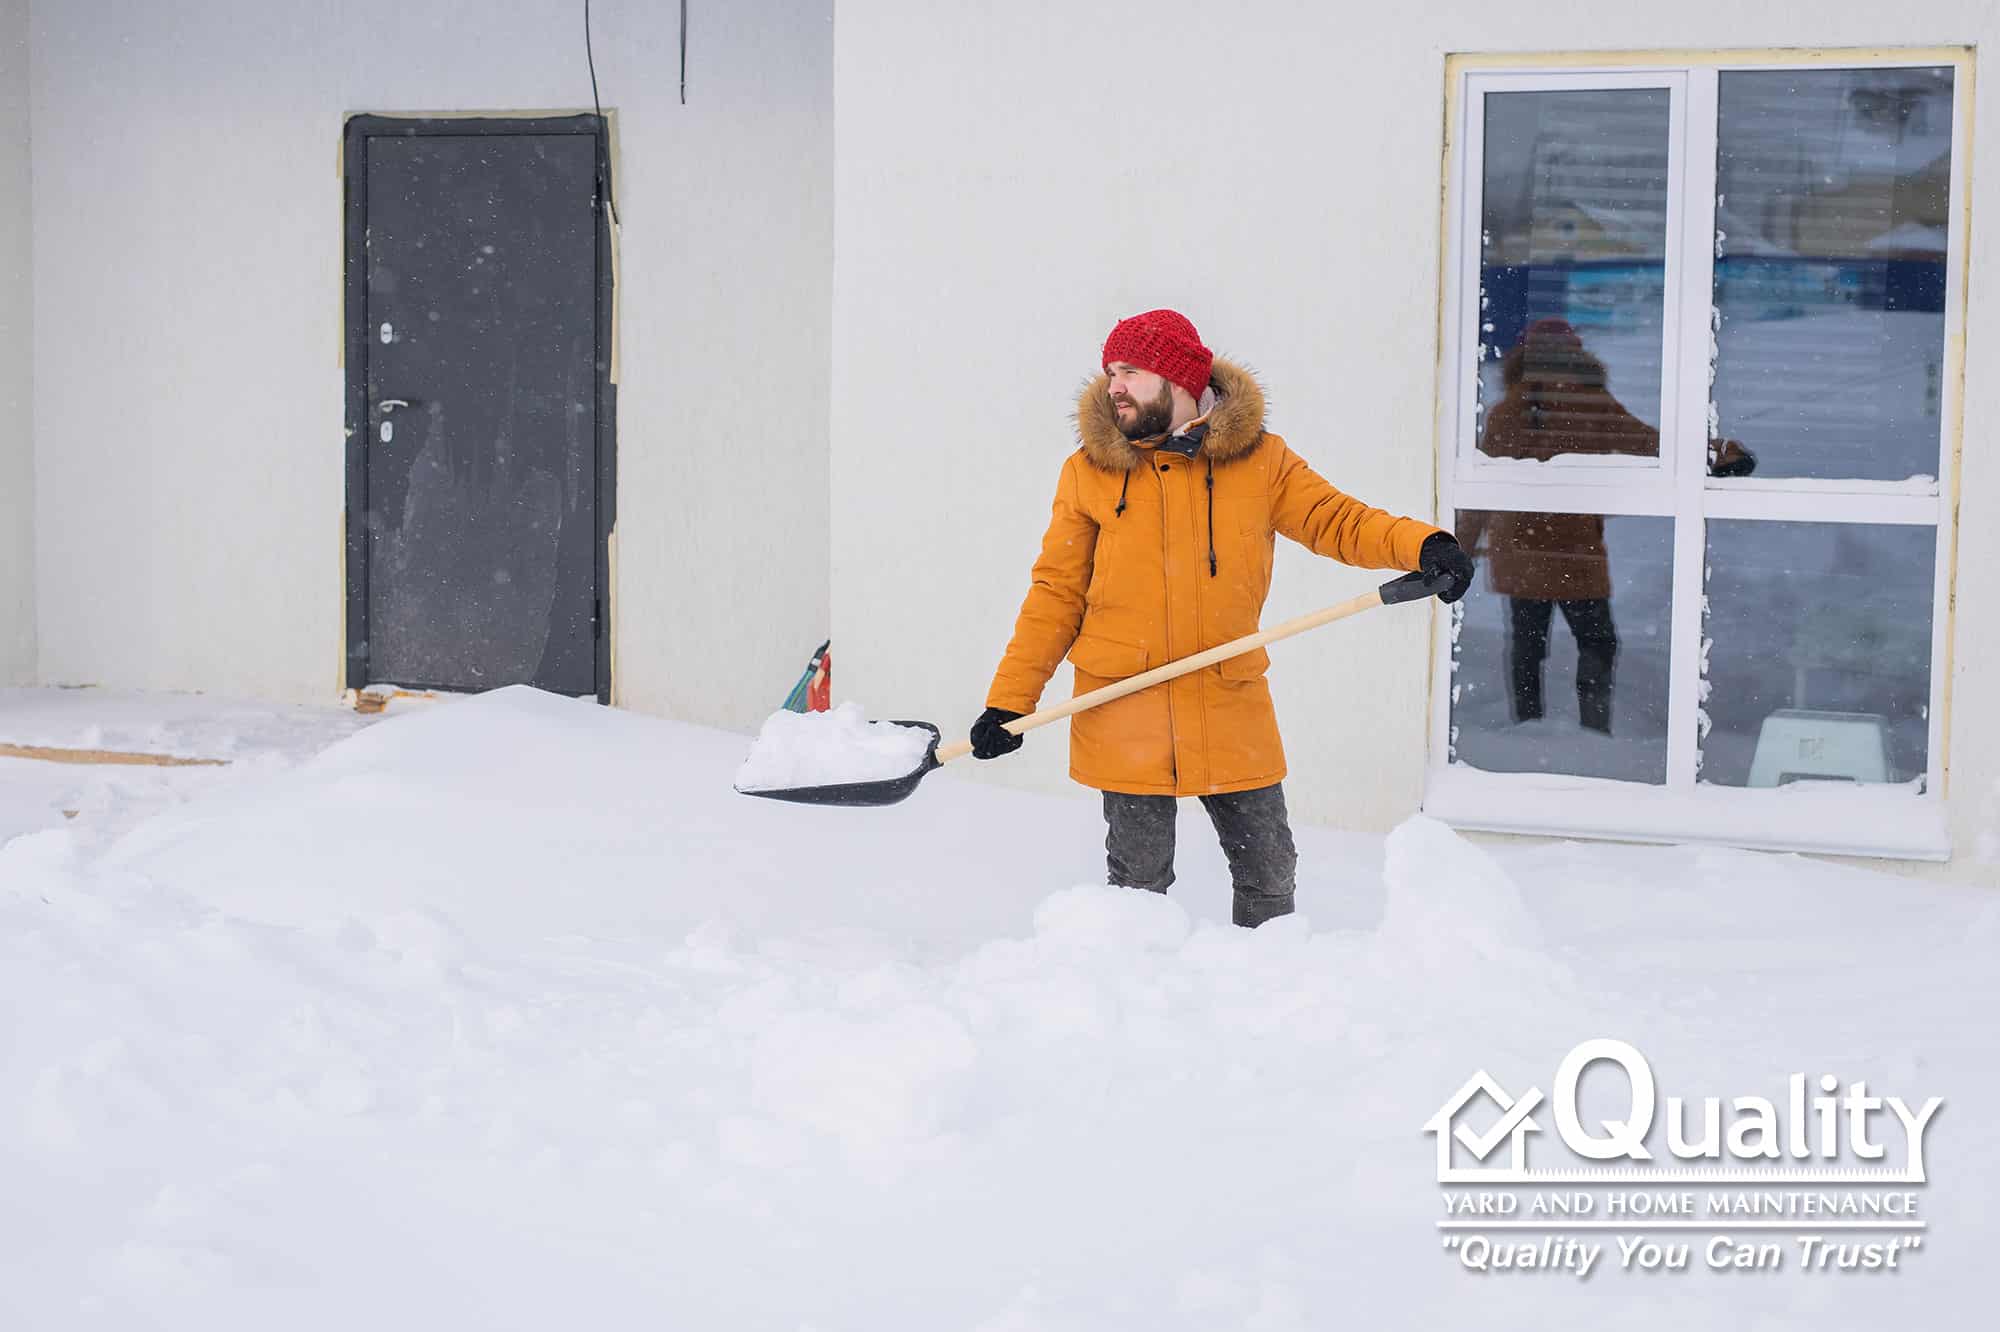 Quality Yard & Home Maintenance shoveling snow on residential sidewalk